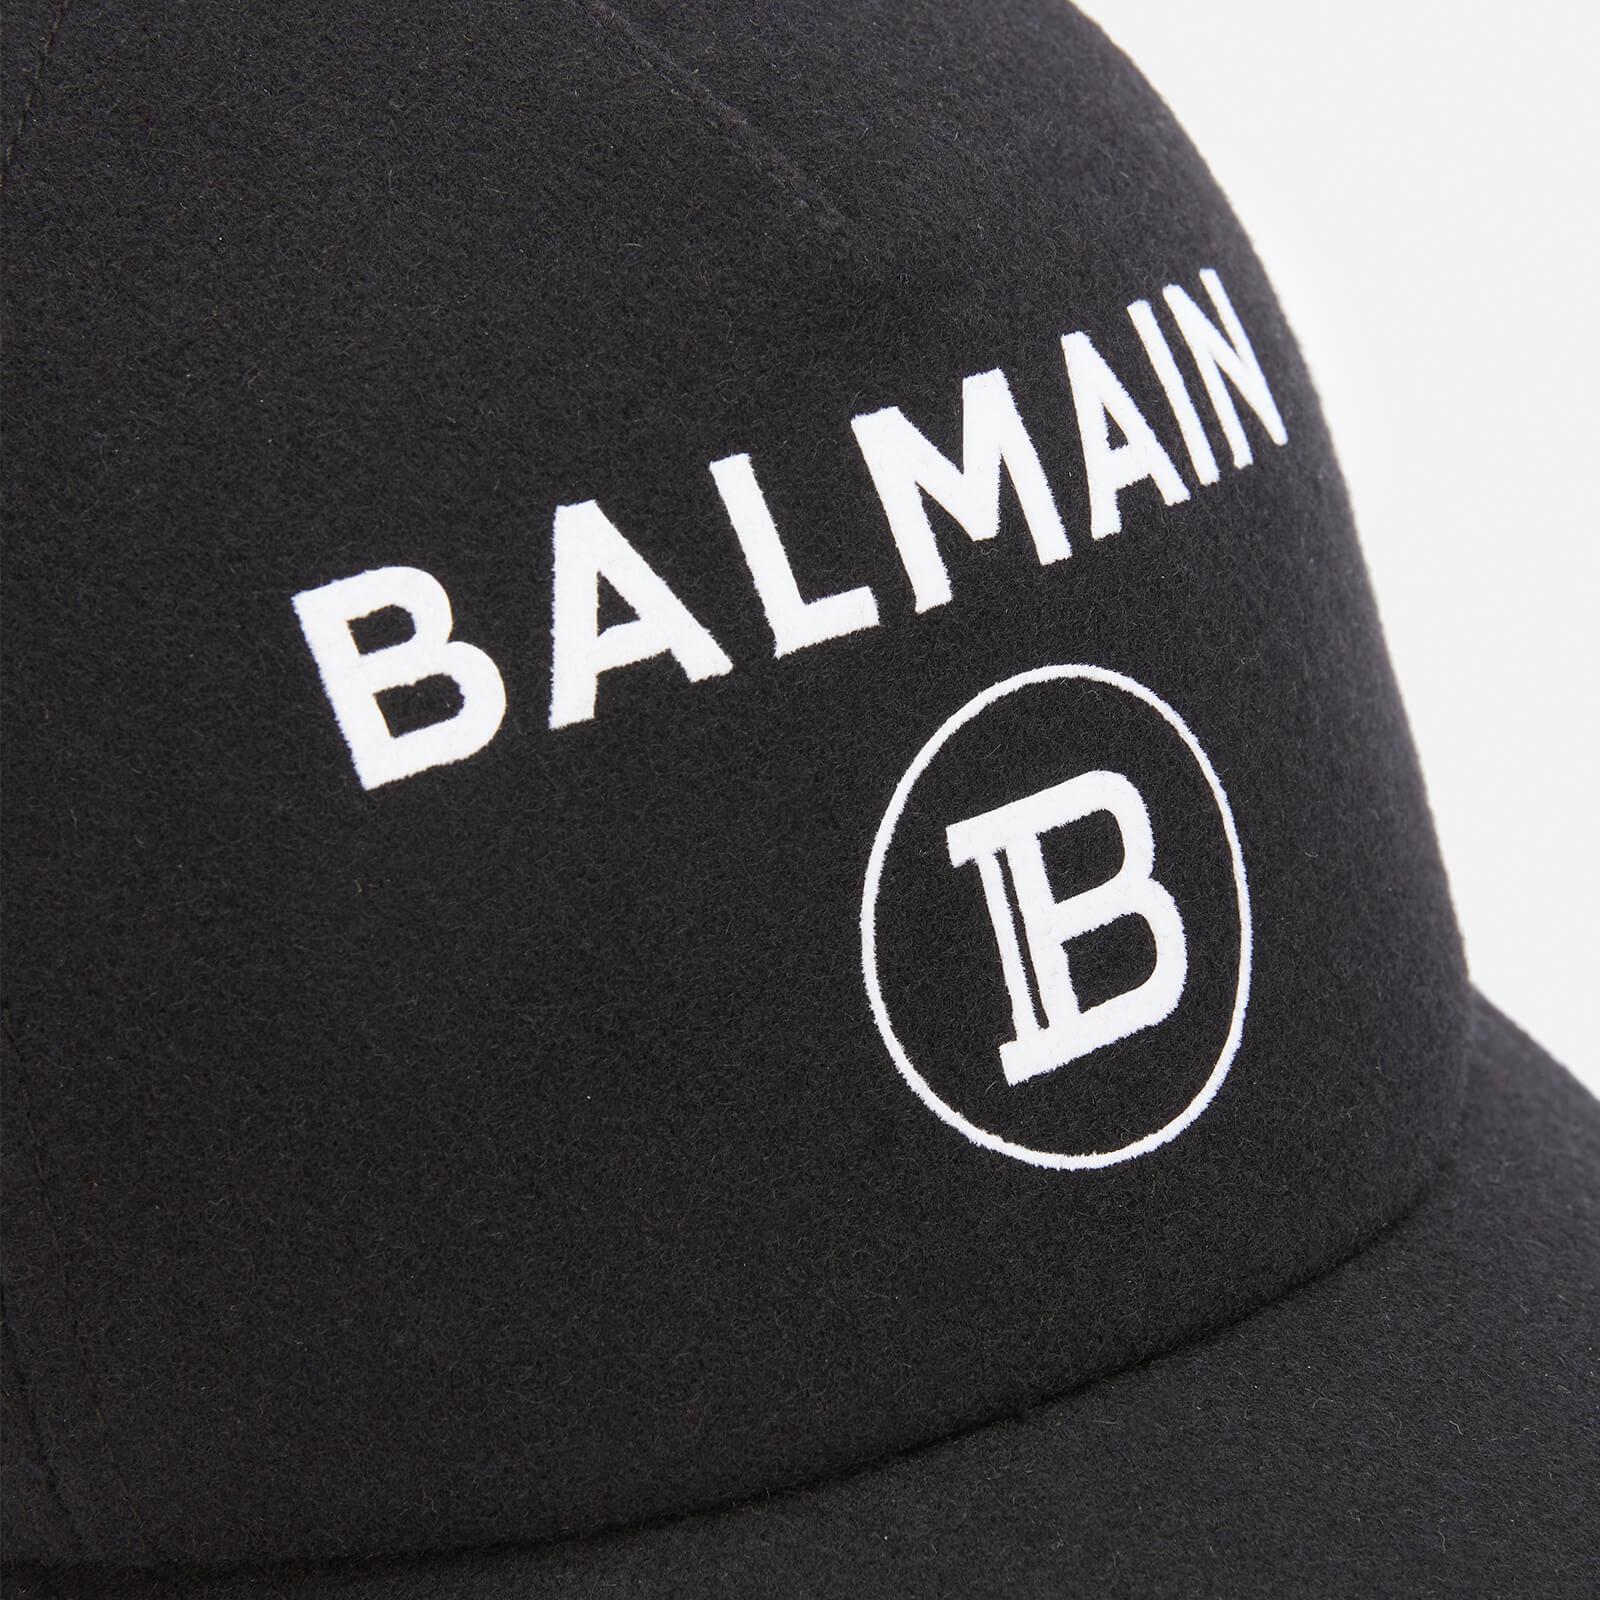 Balmain Wool Flocked Cap in Black for Men - Lyst